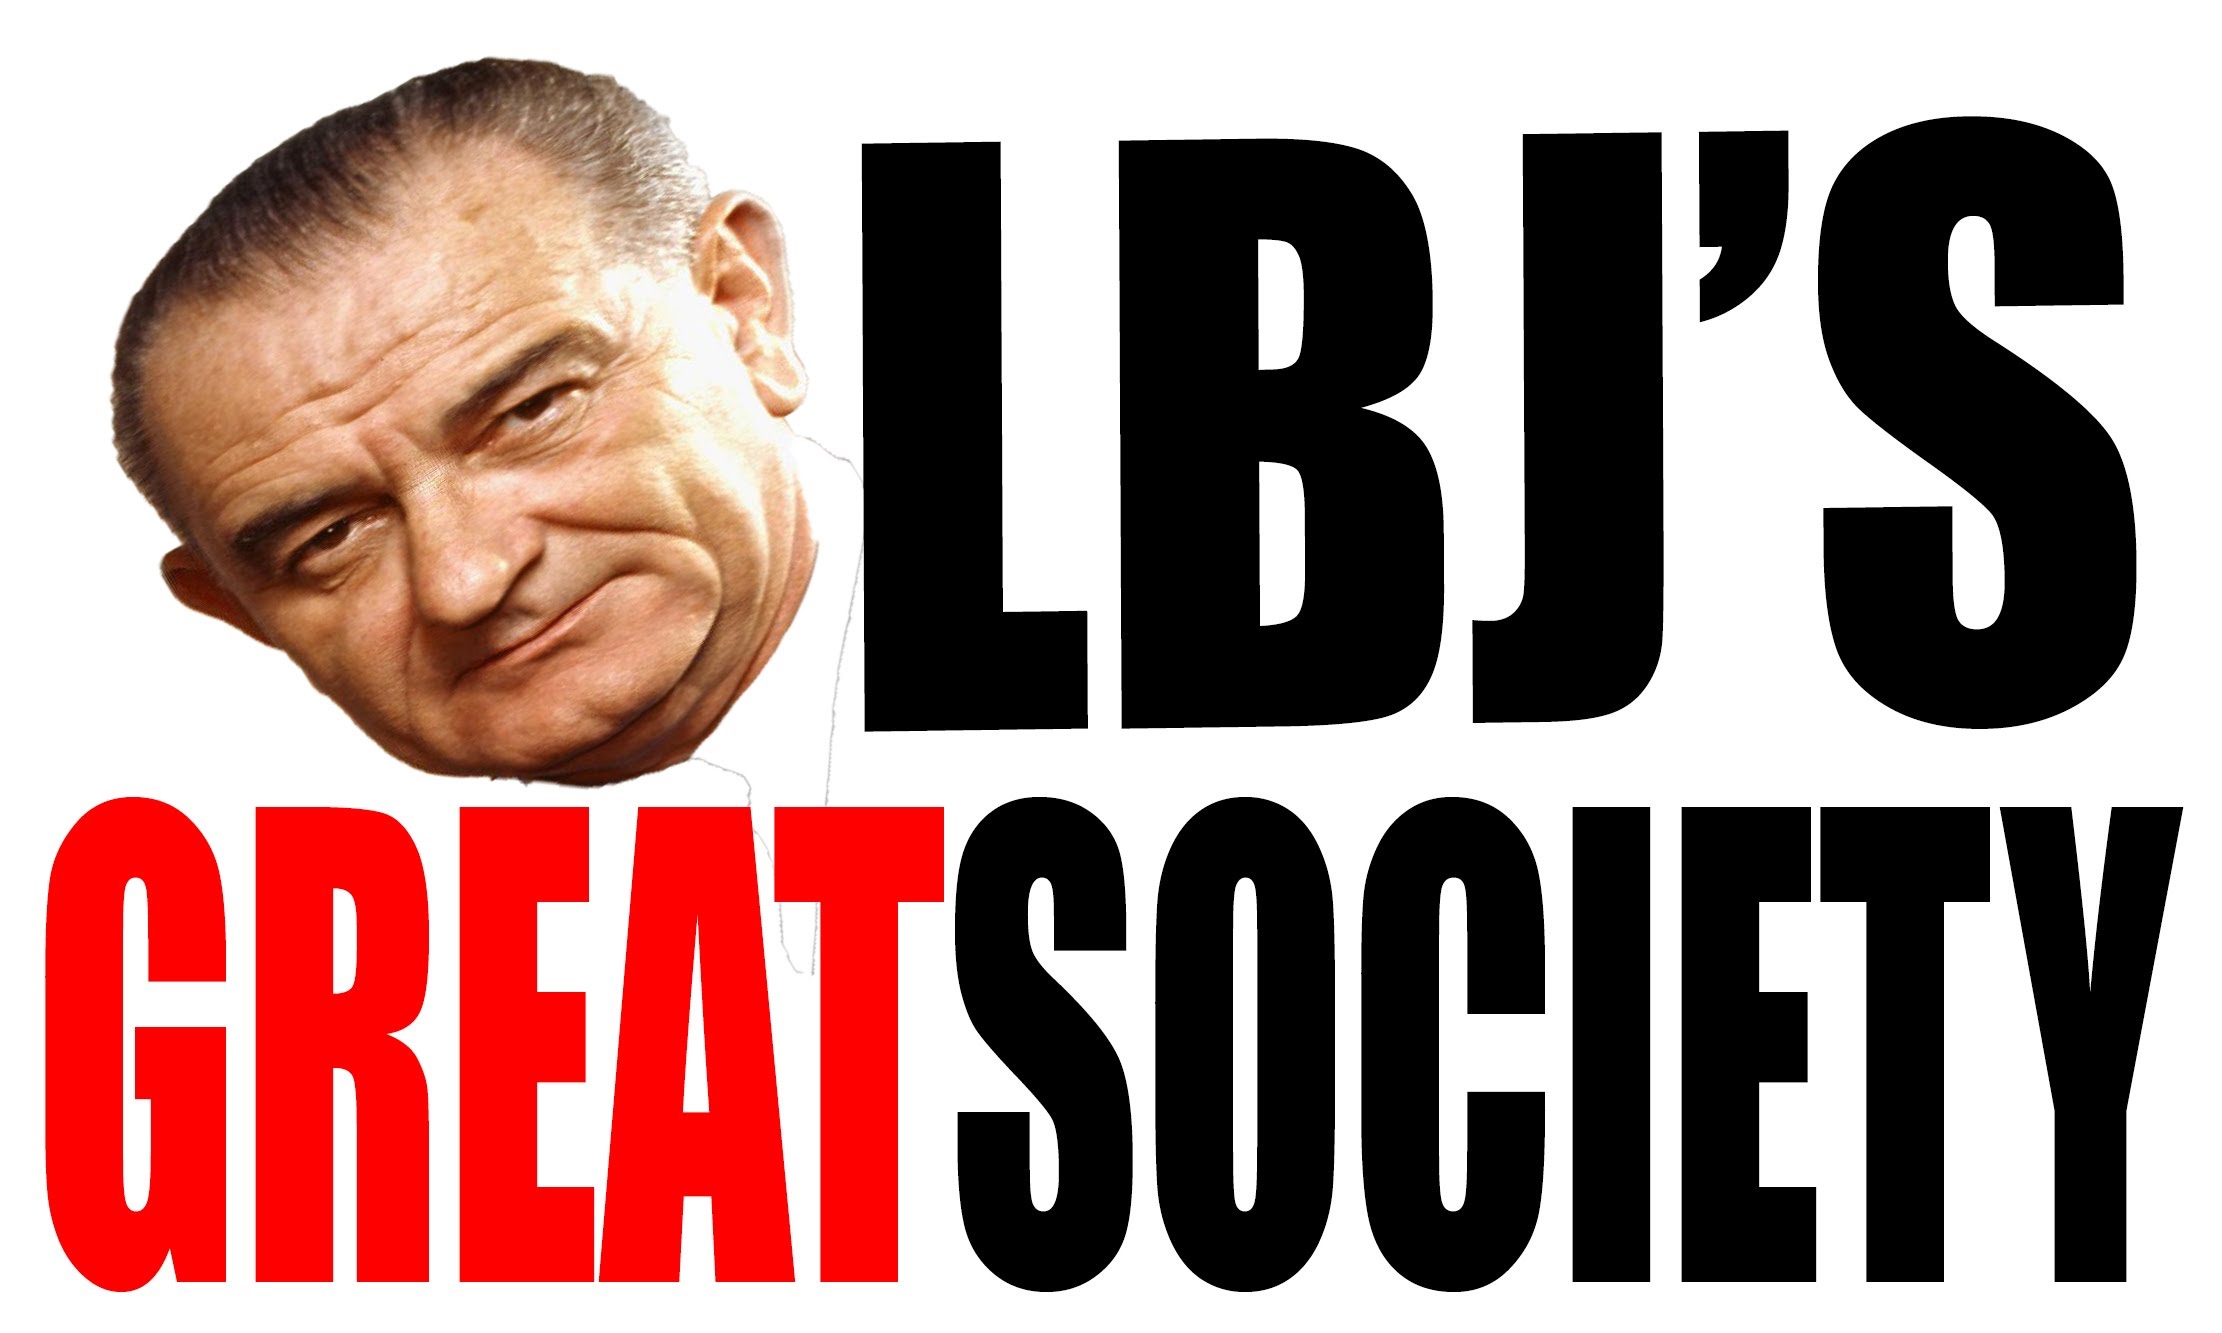 The great society